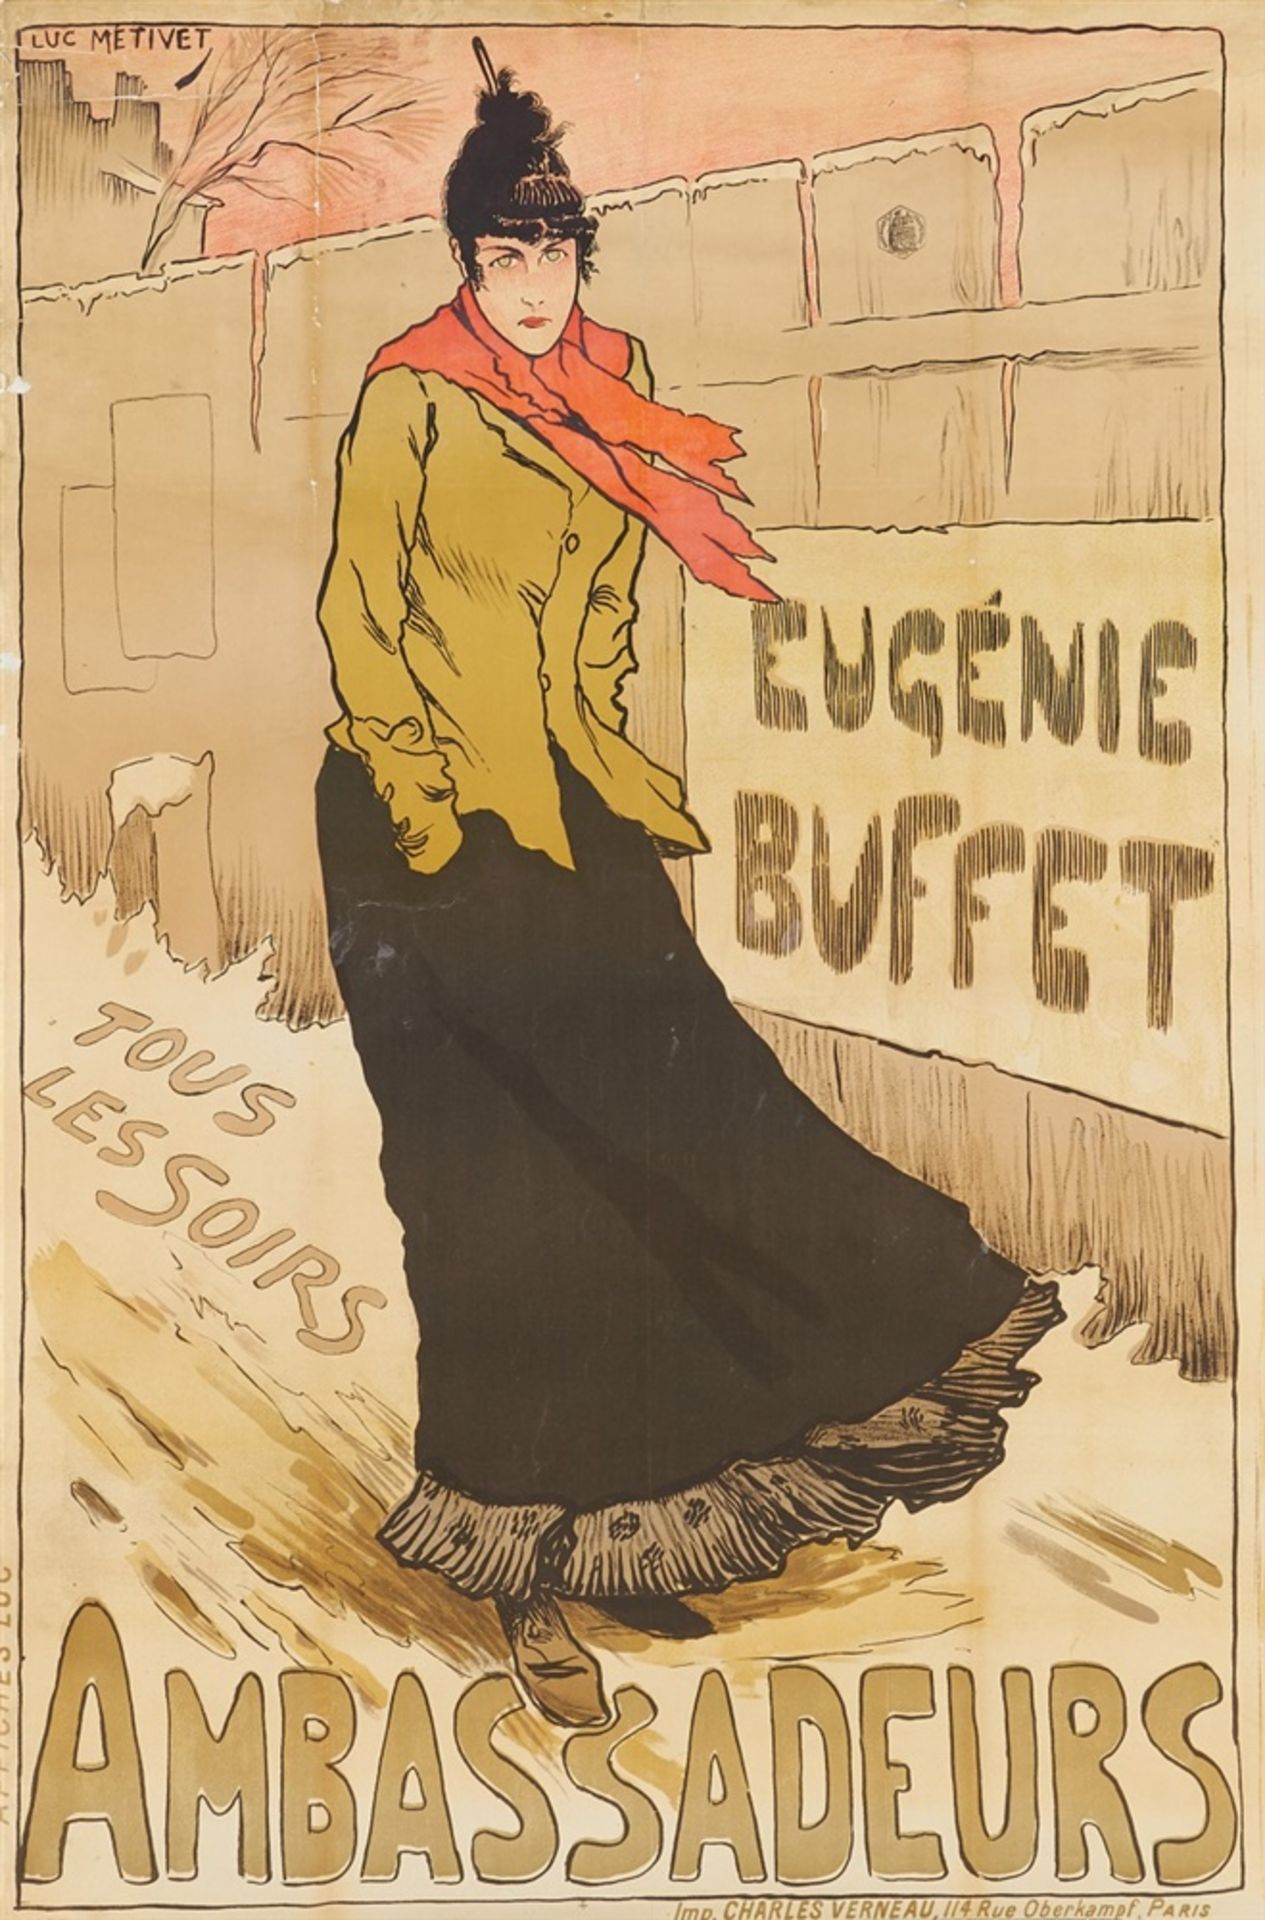 LUCIEN MARIE F. MÉTIVET 1863 - 1930 EUGÉNIE BUFFET – TOUS LES SOIRS – AMBASSADEURS (1893)